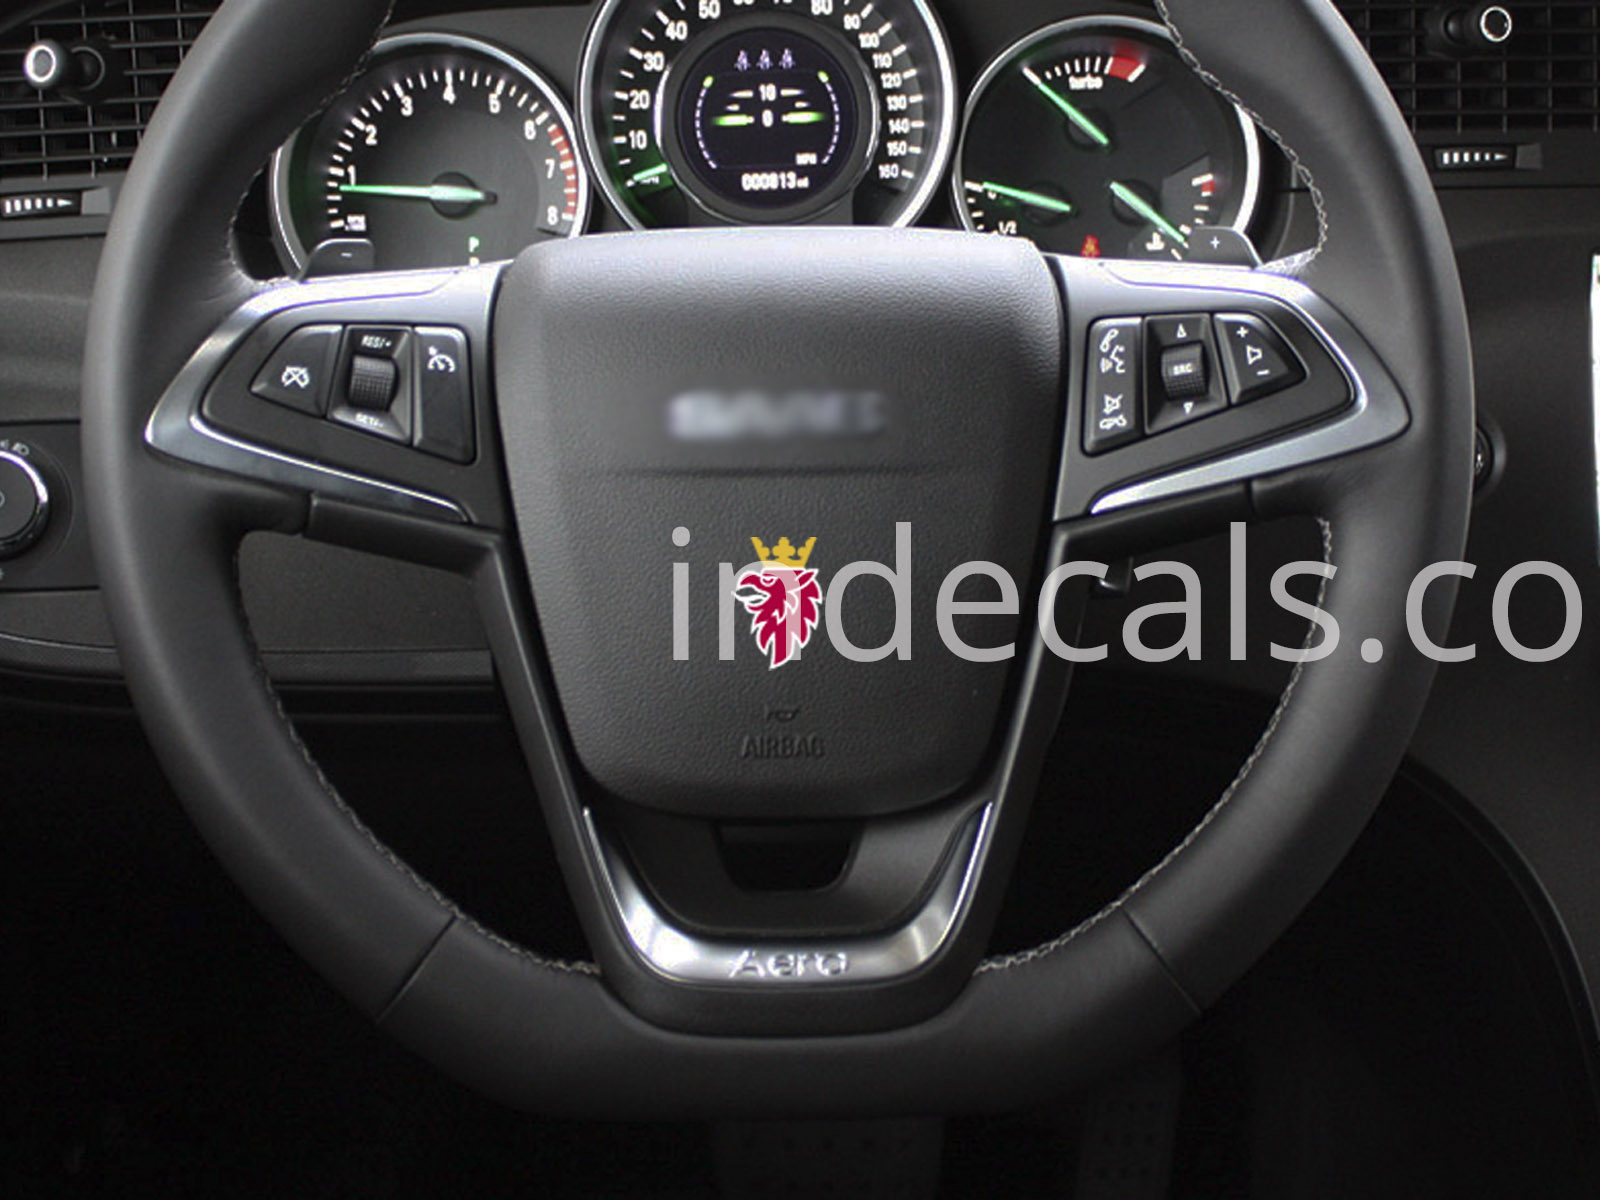 2 x Saab stickers for Steering Wheel